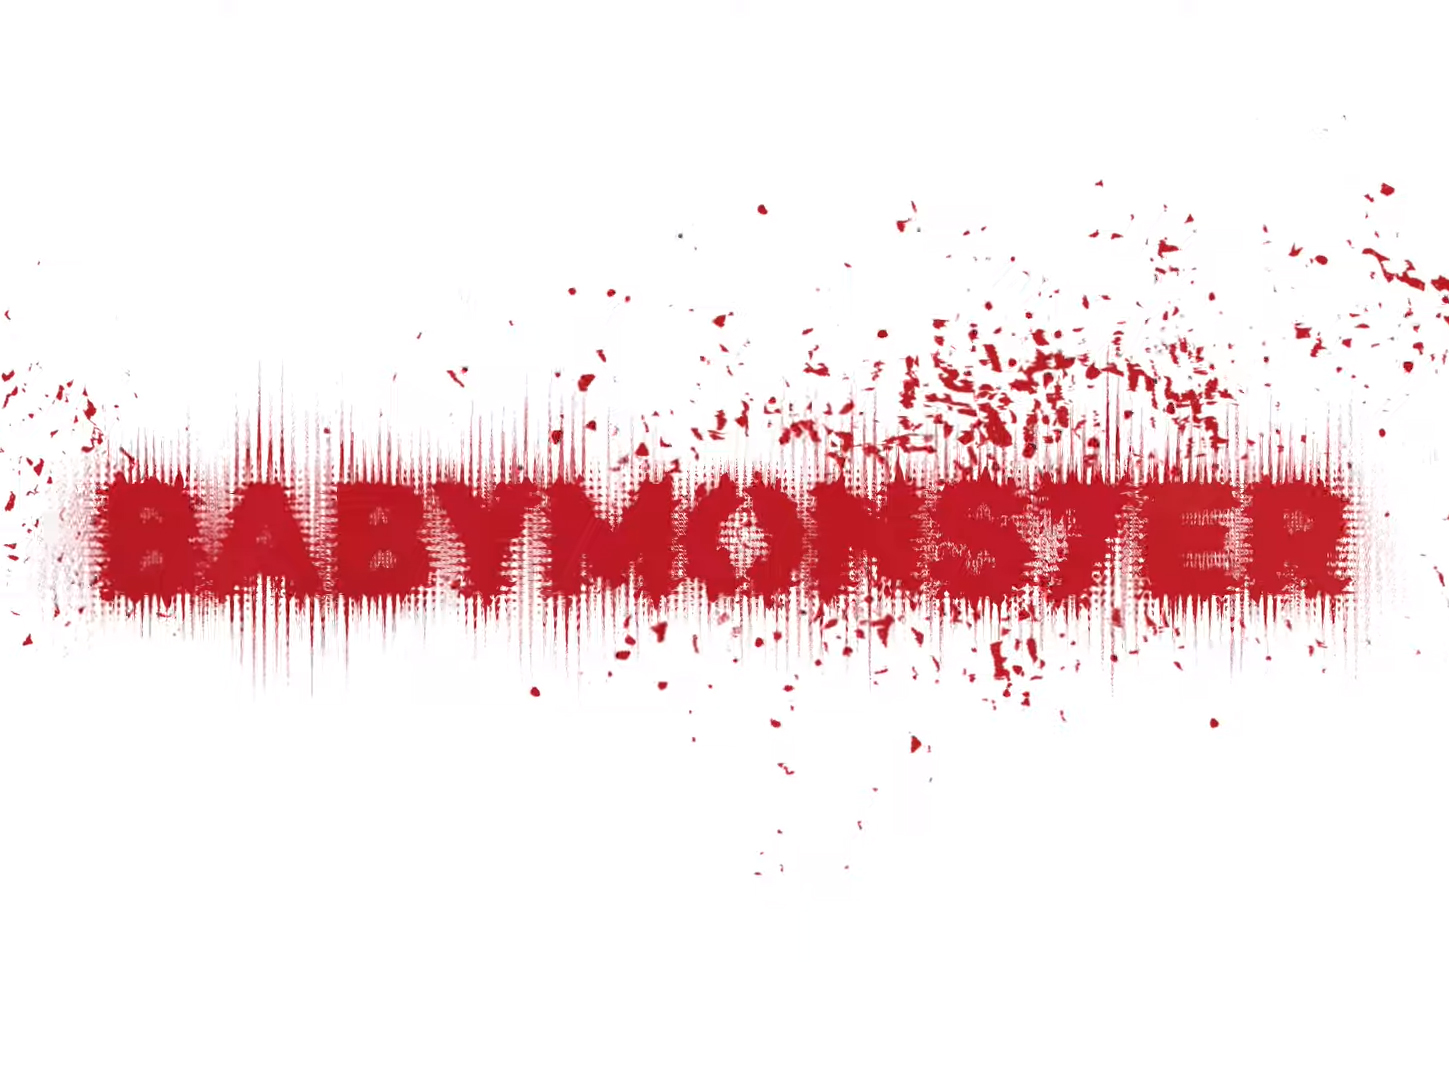 exactly where how to buy preorder BabyMonster mini-album BABYMONS7ER photobook tag bundle version contents / photocard retailer bonuses POB YG US